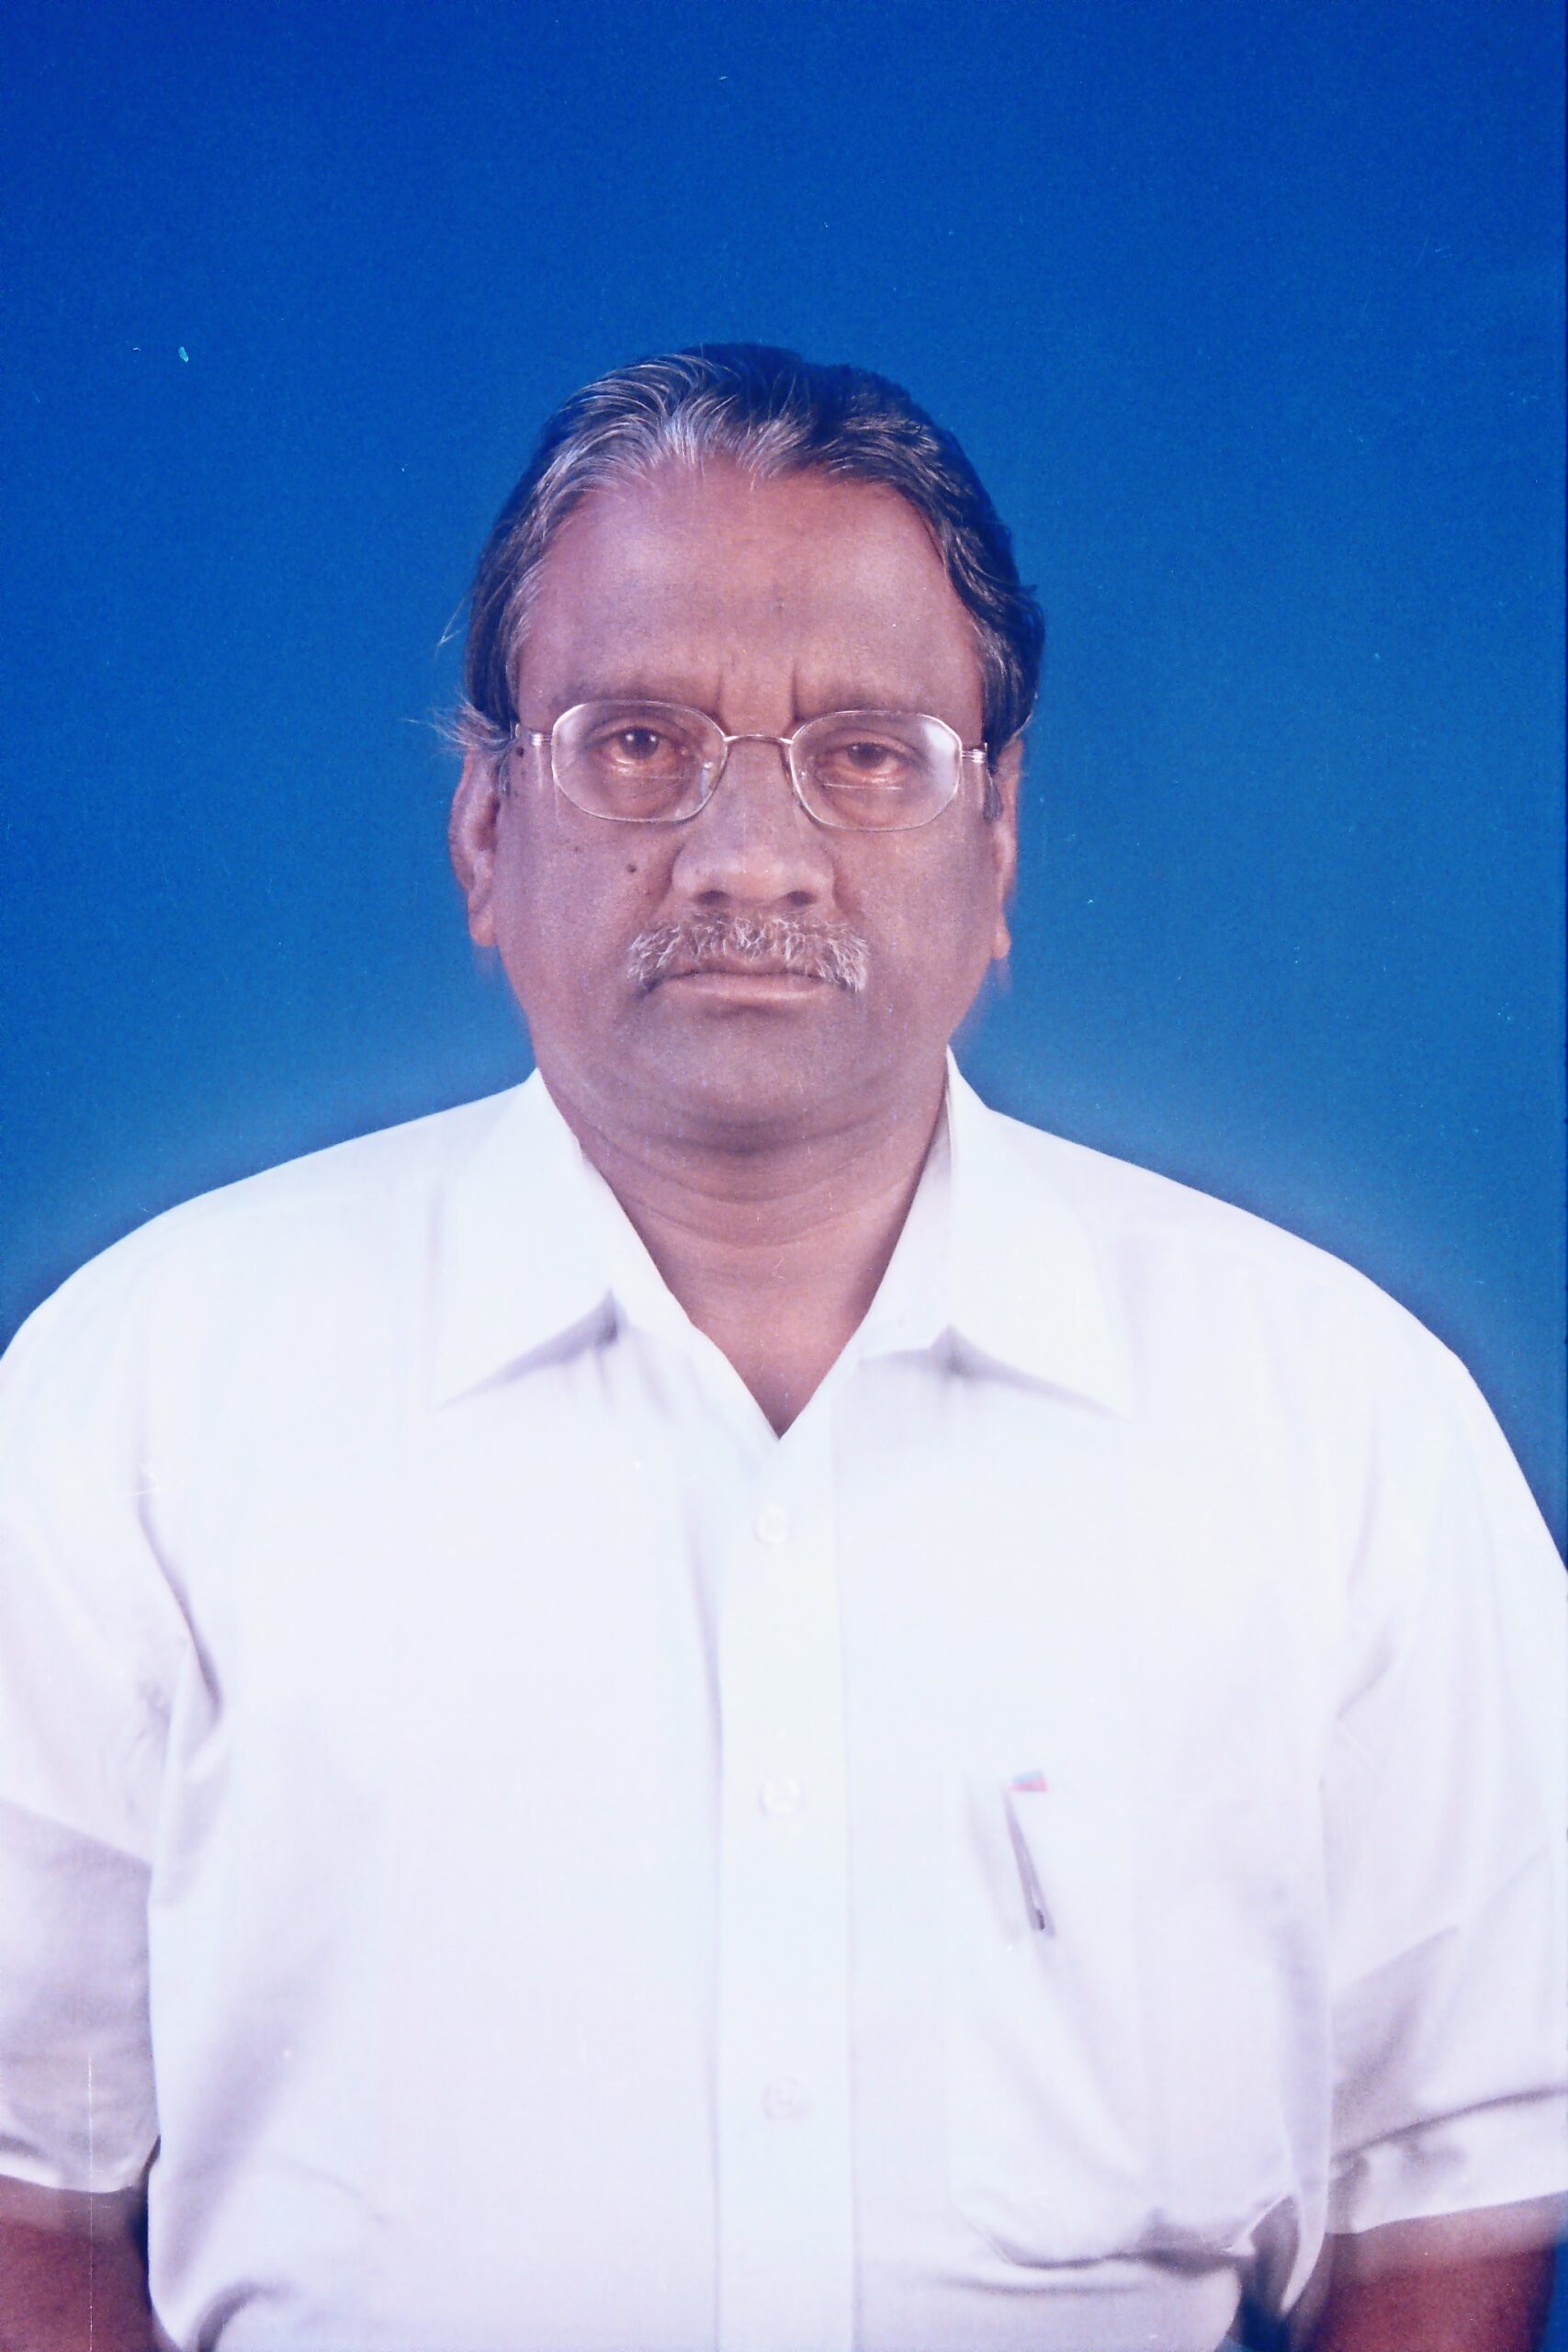 Chandrasekaran Rajamani